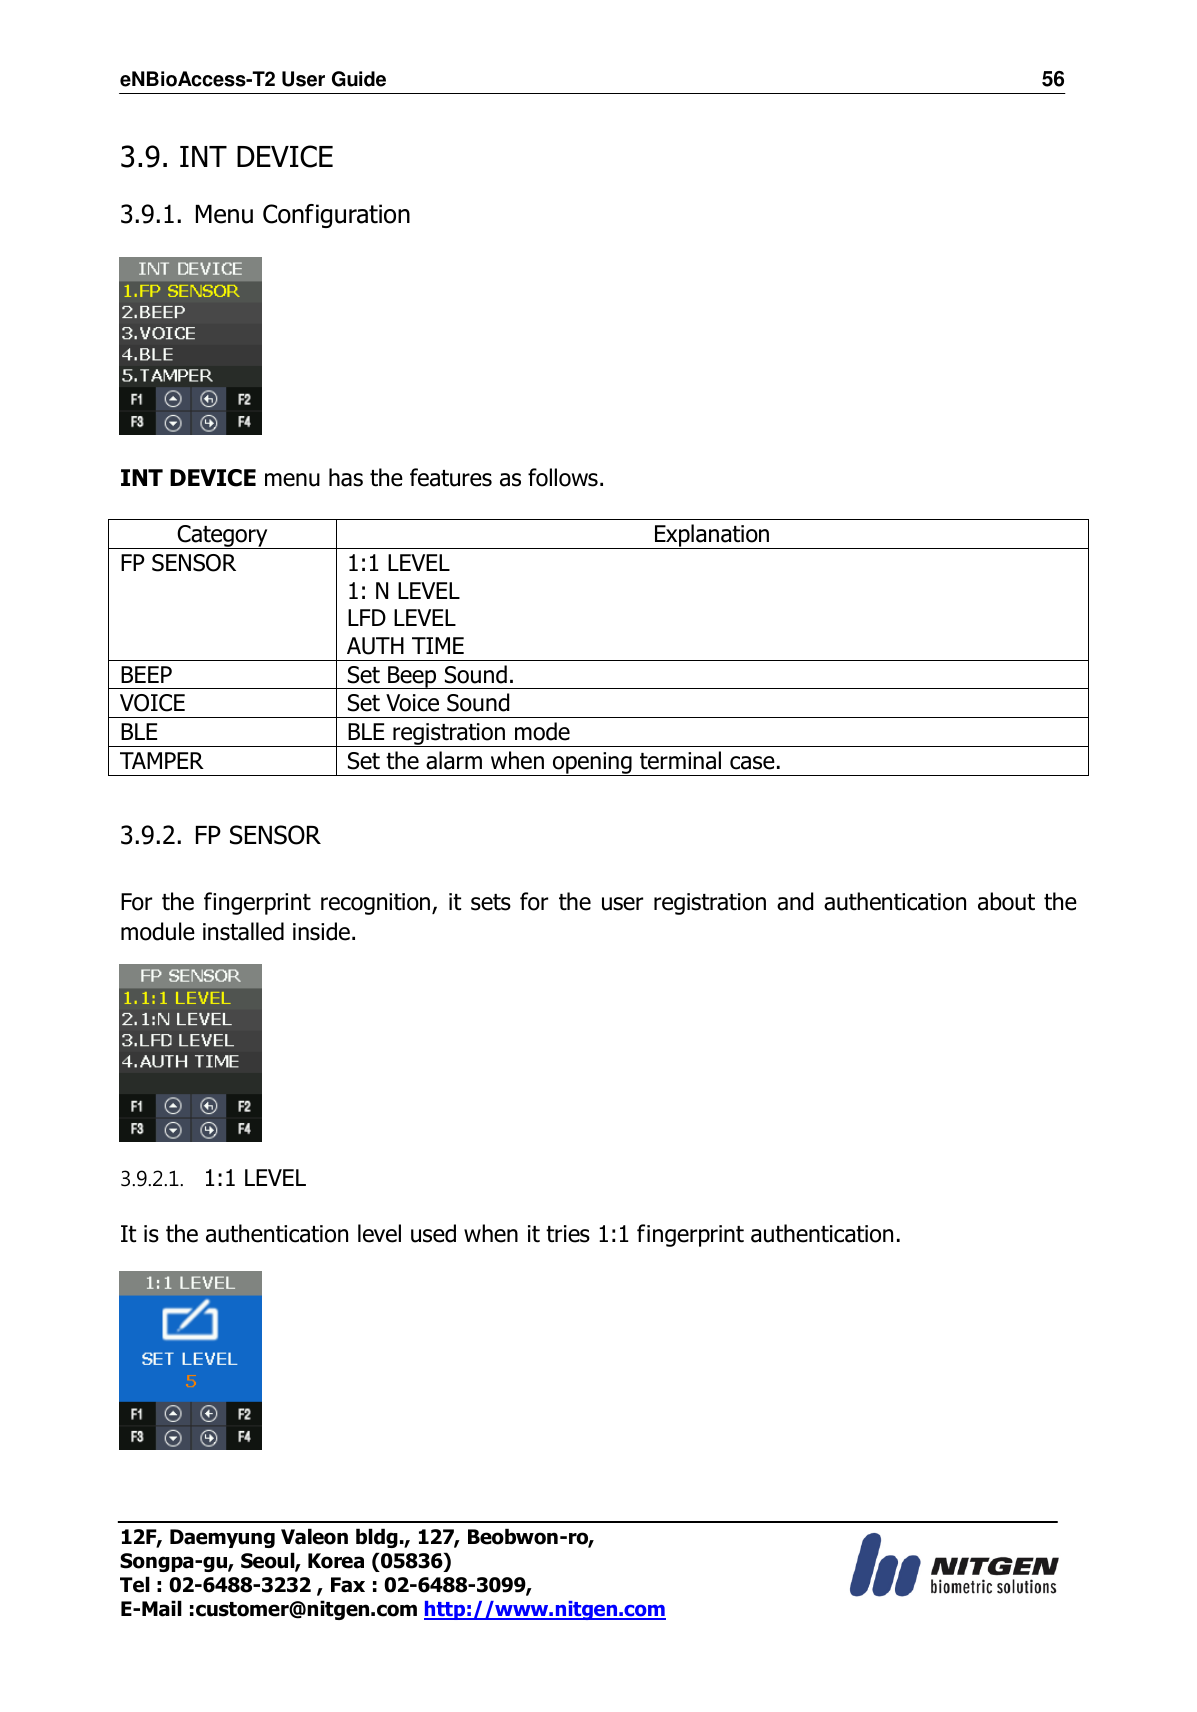 eNBioAccess-T2 User Guide                                                                    56 12F, Daemyung Valeon bldg., 127, Beobwon-ro, Songpa-gu, Seoul, Korea (05836) Tel : 02-6488-3232 , Fax : 02-6488-3099,   E-Mail :customer@nitgen.com http://www.nitgen.com   3.9. INT DEVICE  3.9.1. Menu Configuration      INT DEVICE menu has the features as follows.  Category Explanation FP SENSOR 1:1 LEVEL   1: N LEVEL LFD LEVEL AUTH TIME BEEP Set Beep Sound. VOICE Set Voice Sound BLE BLE registration mode TAMPER Set the alarm when opening terminal case.  3.9.2. FP SENSOR    For the fingerprint recognition, it sets for the user registration and authentication about the module installed inside.  3.9.2.1. 1:1 LEVEL  It is the authentication level used when it tries 1:1 fingerprint authentication.    